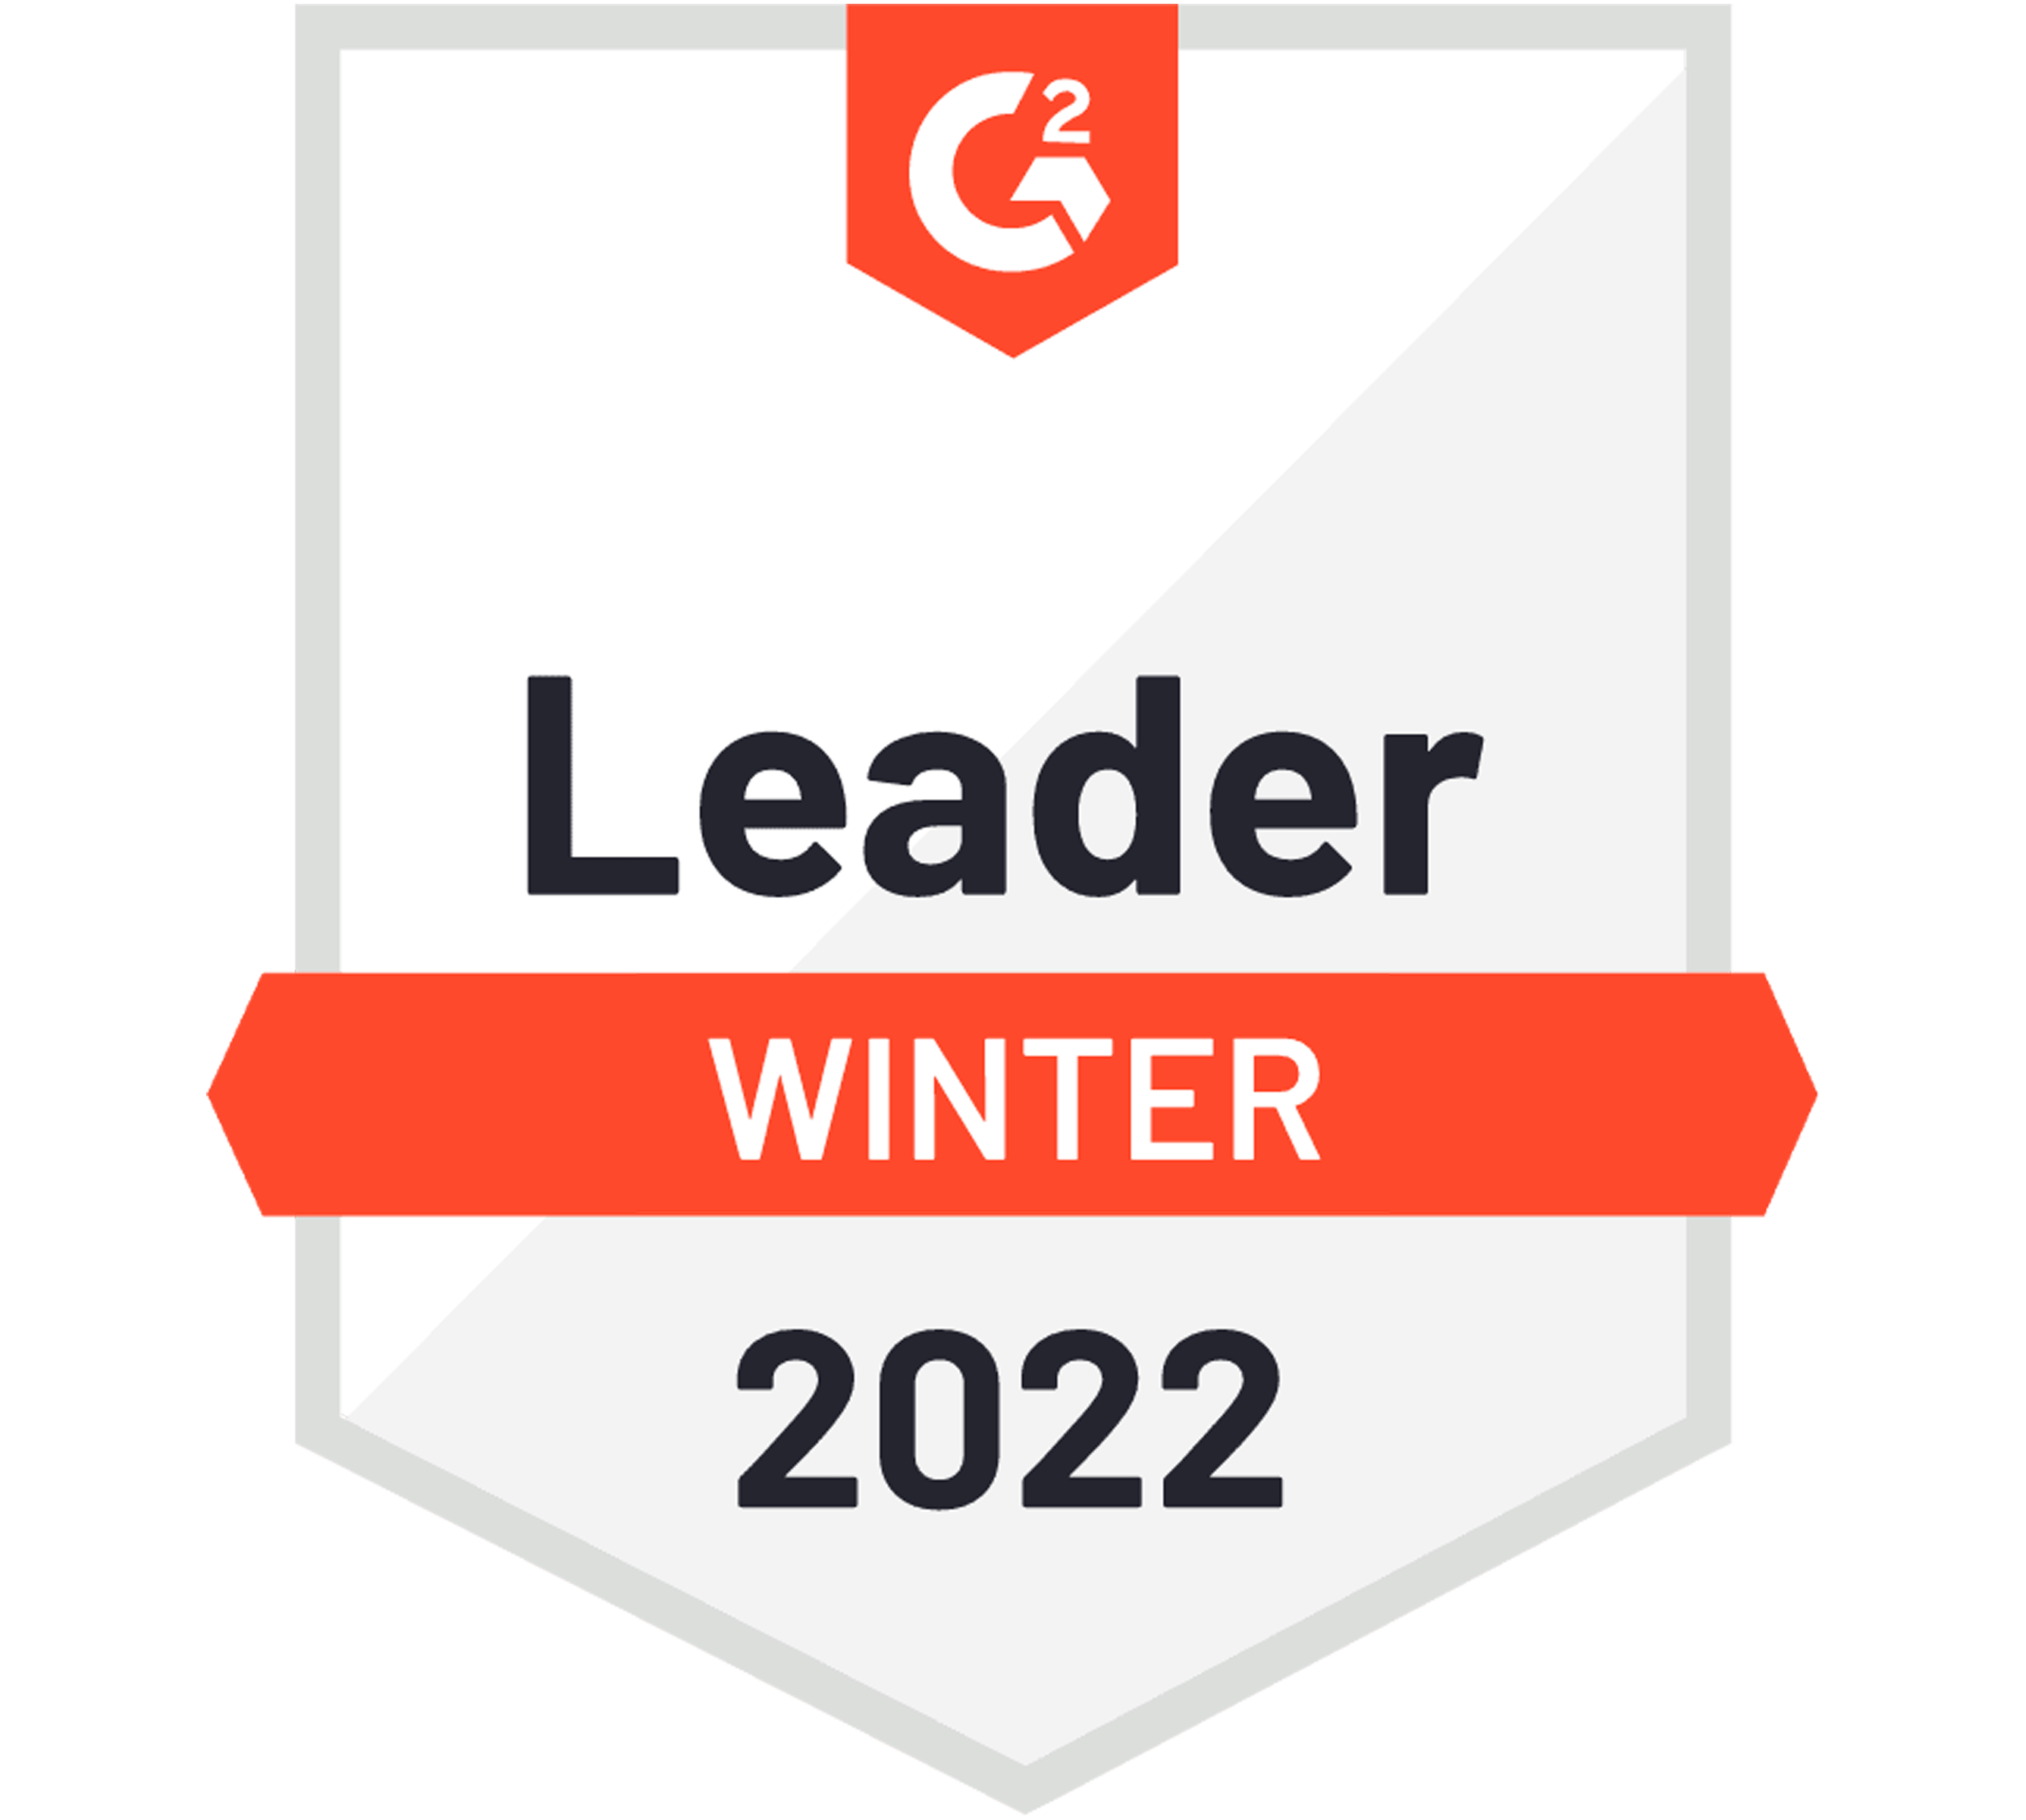 G2 Winter 2022